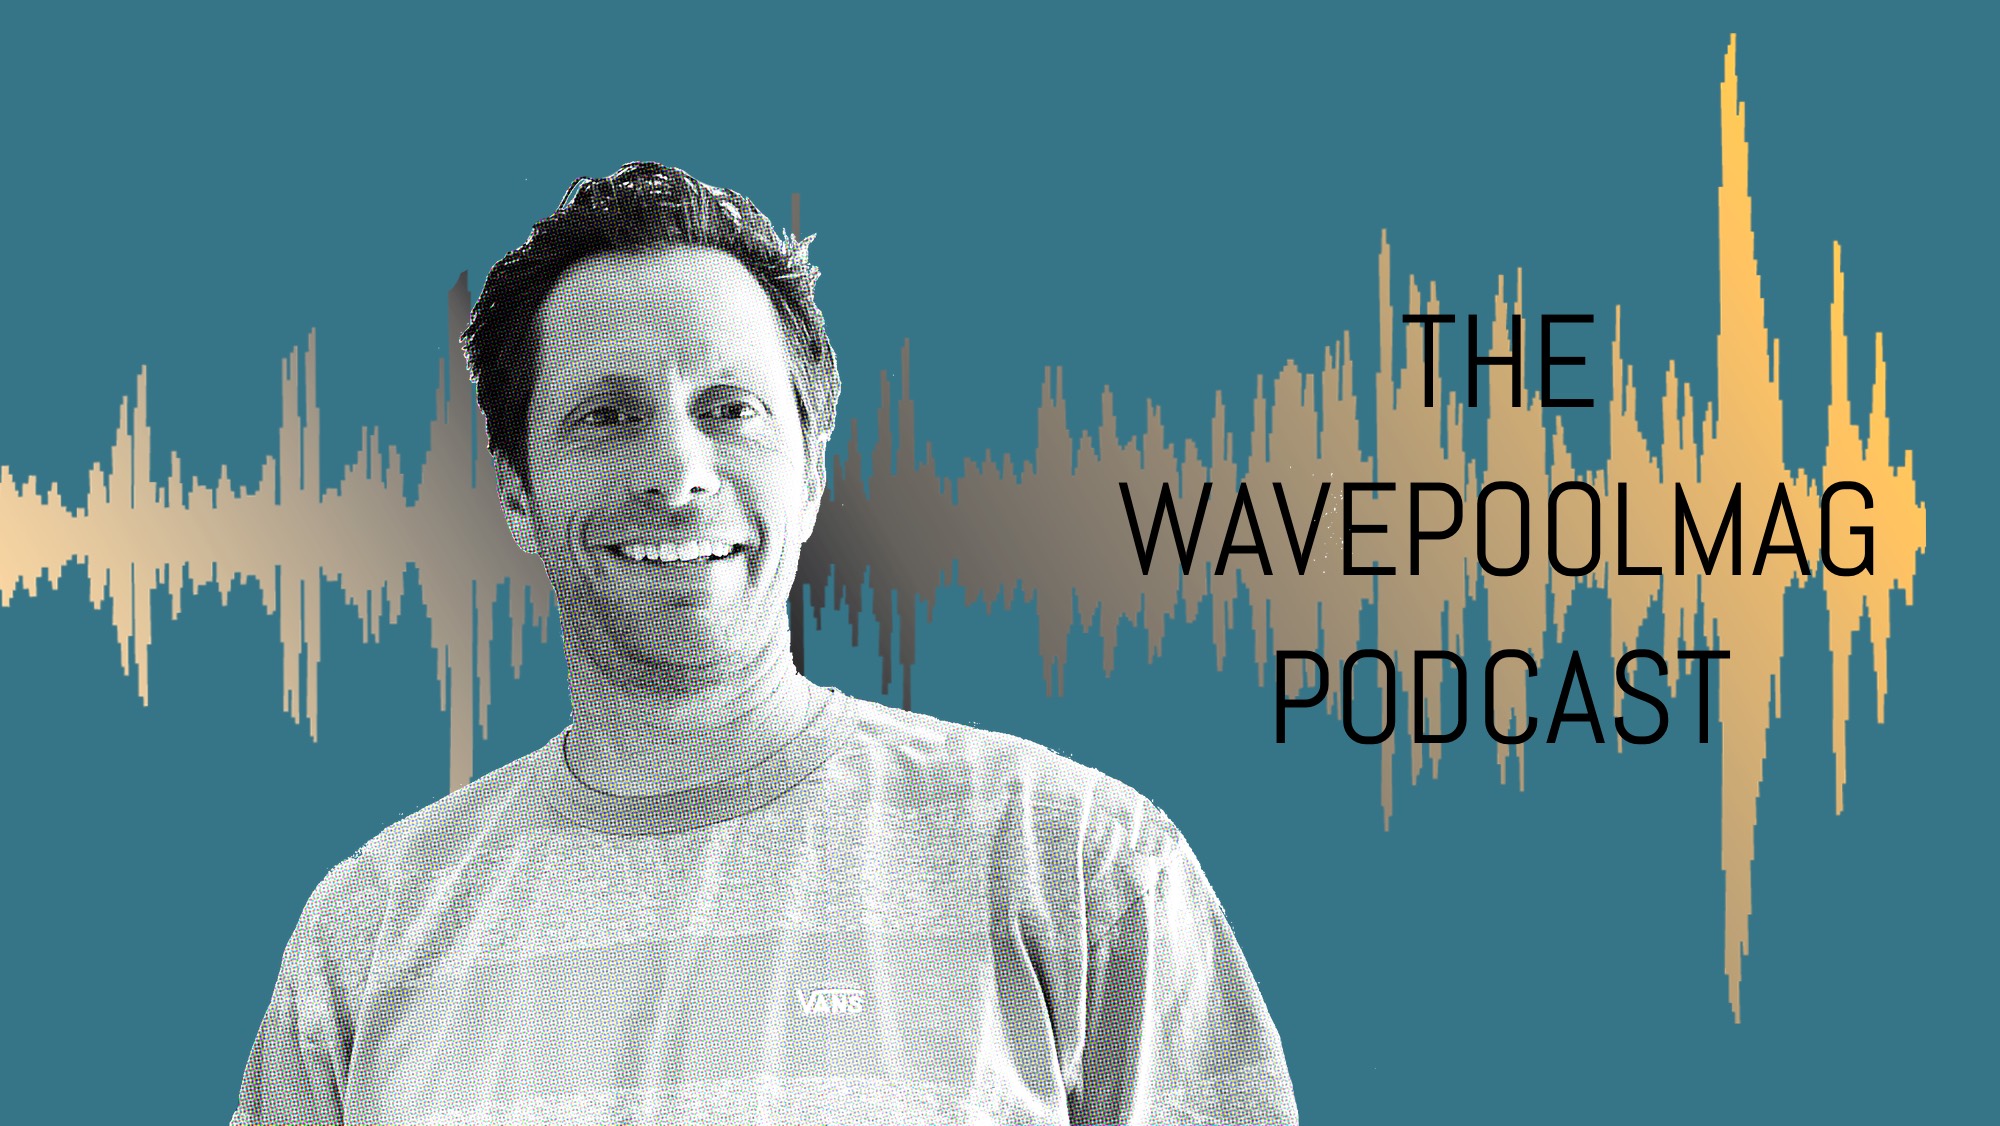 Matt Gunn on the Wavepoolmag podcast